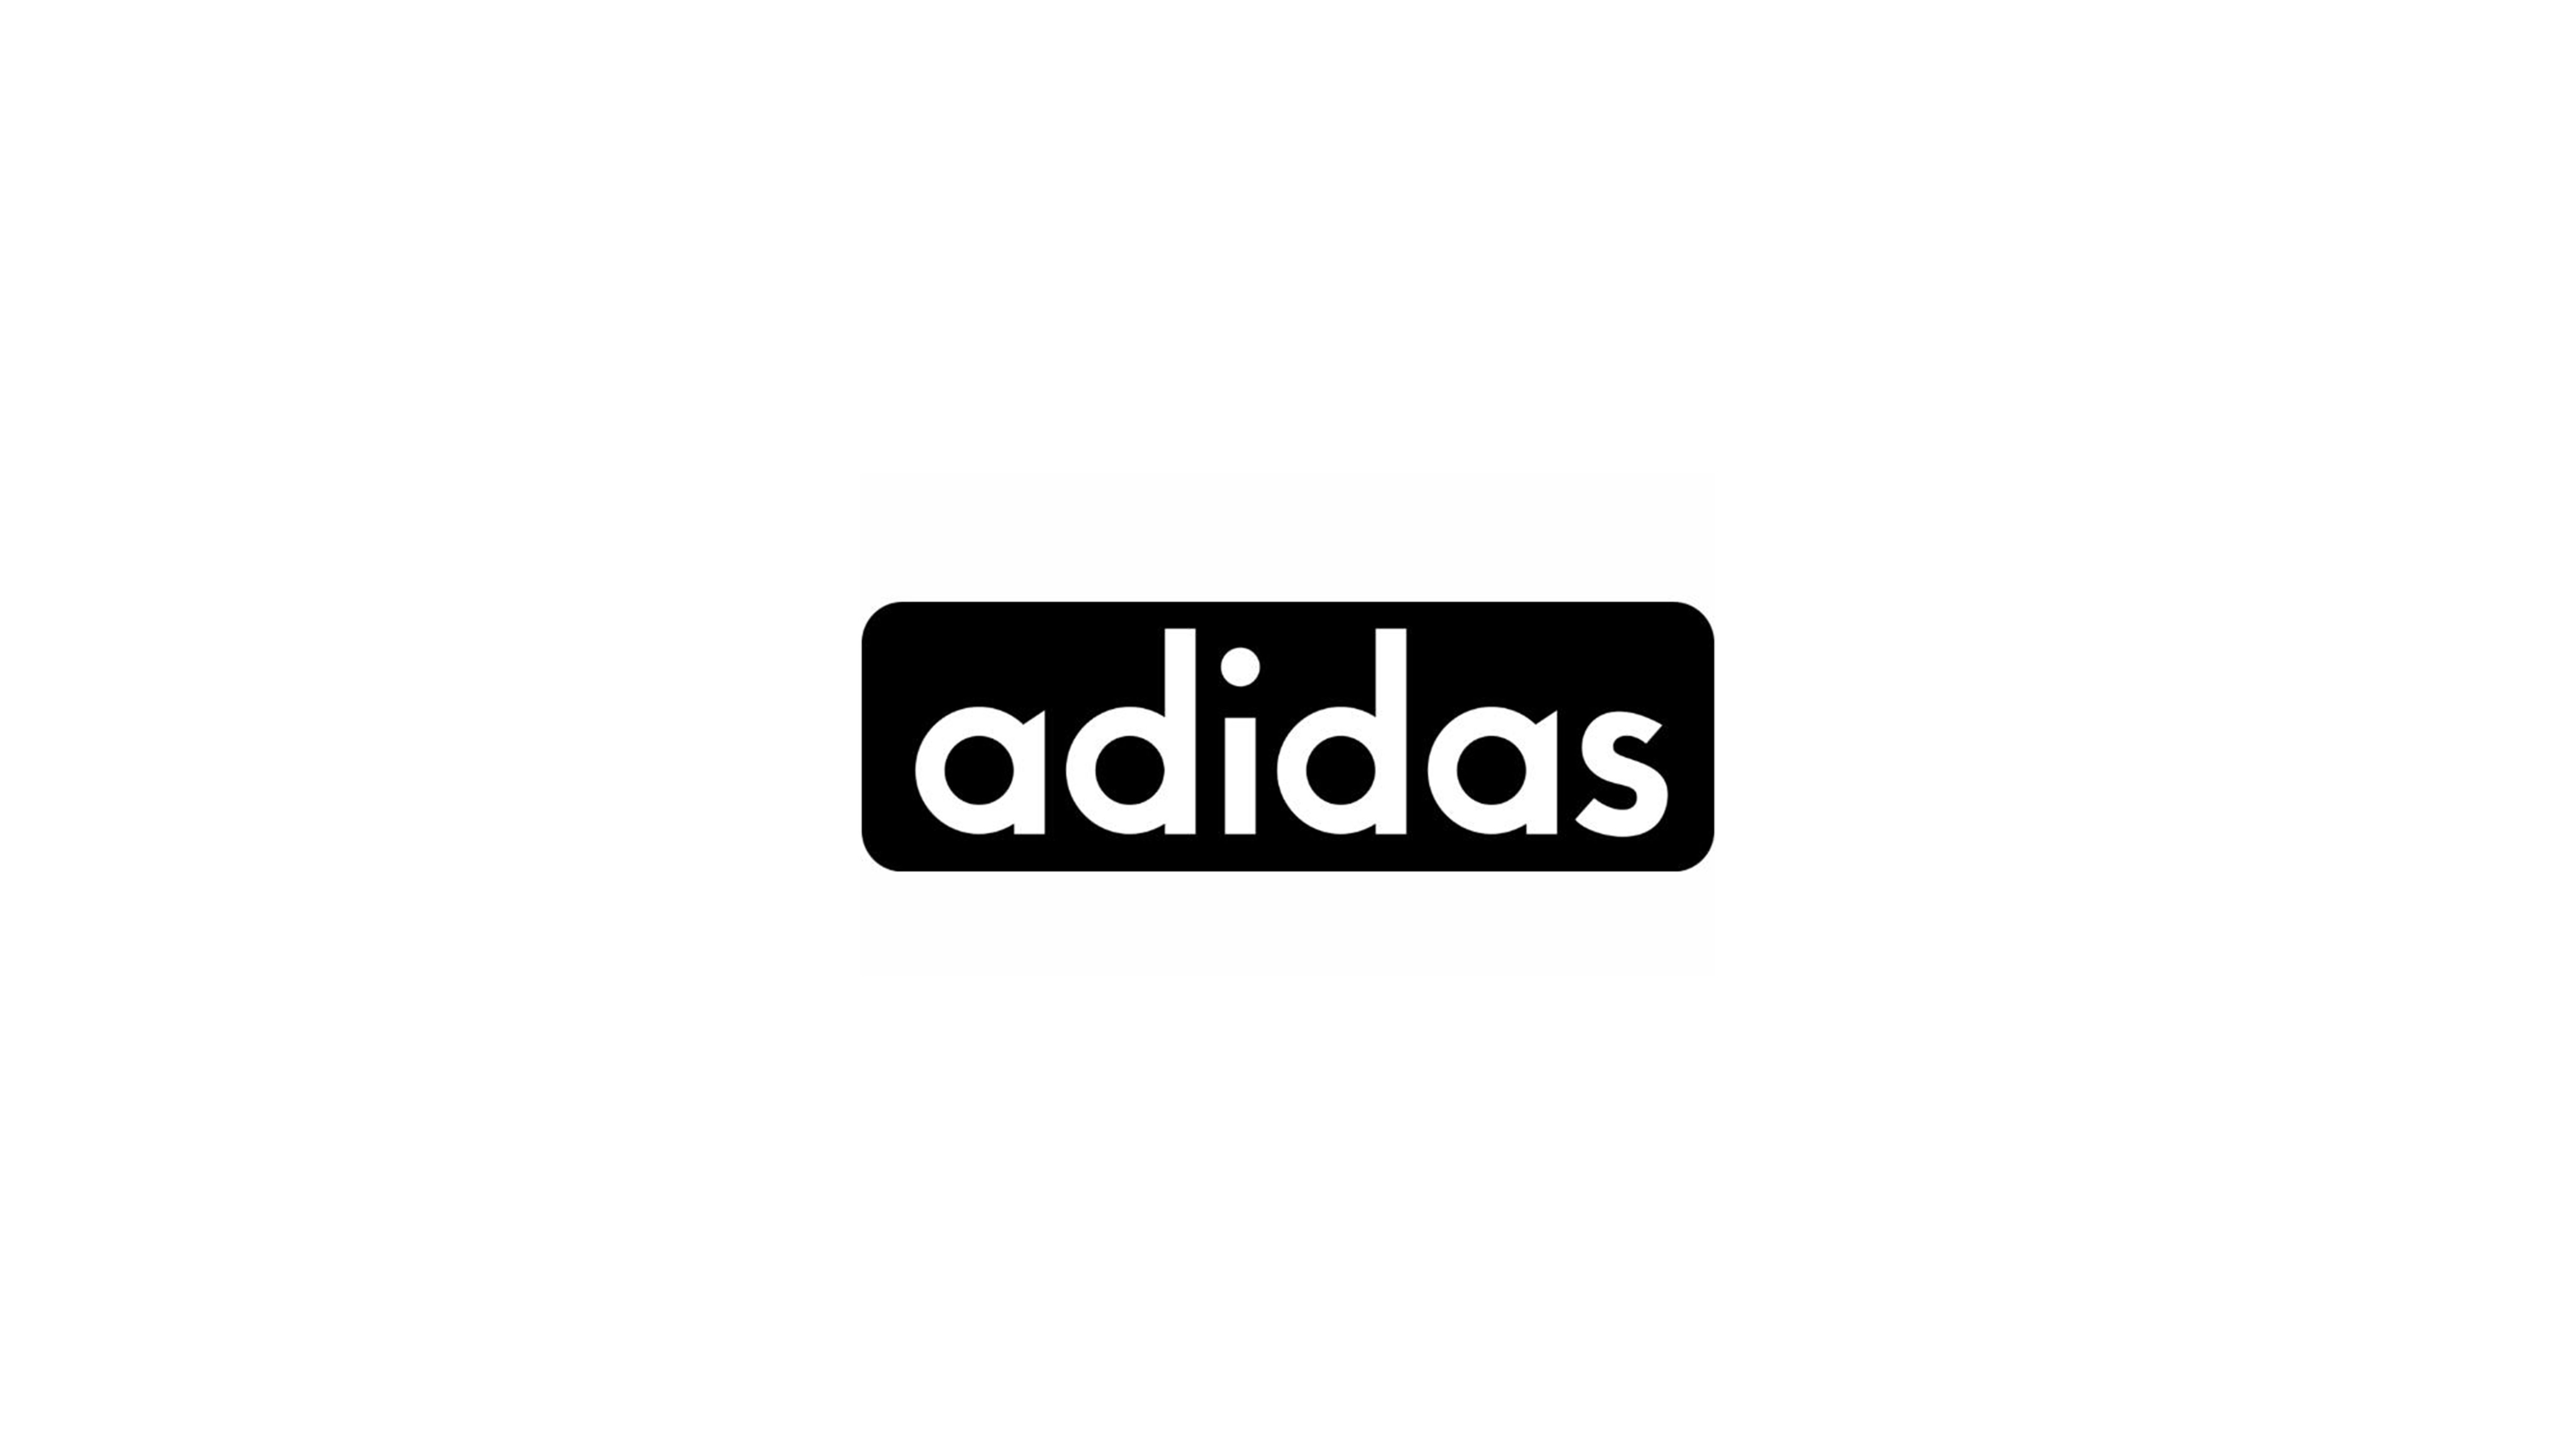 Adidas阿迪达斯标志高清图片素材-编号06203159-图行天下